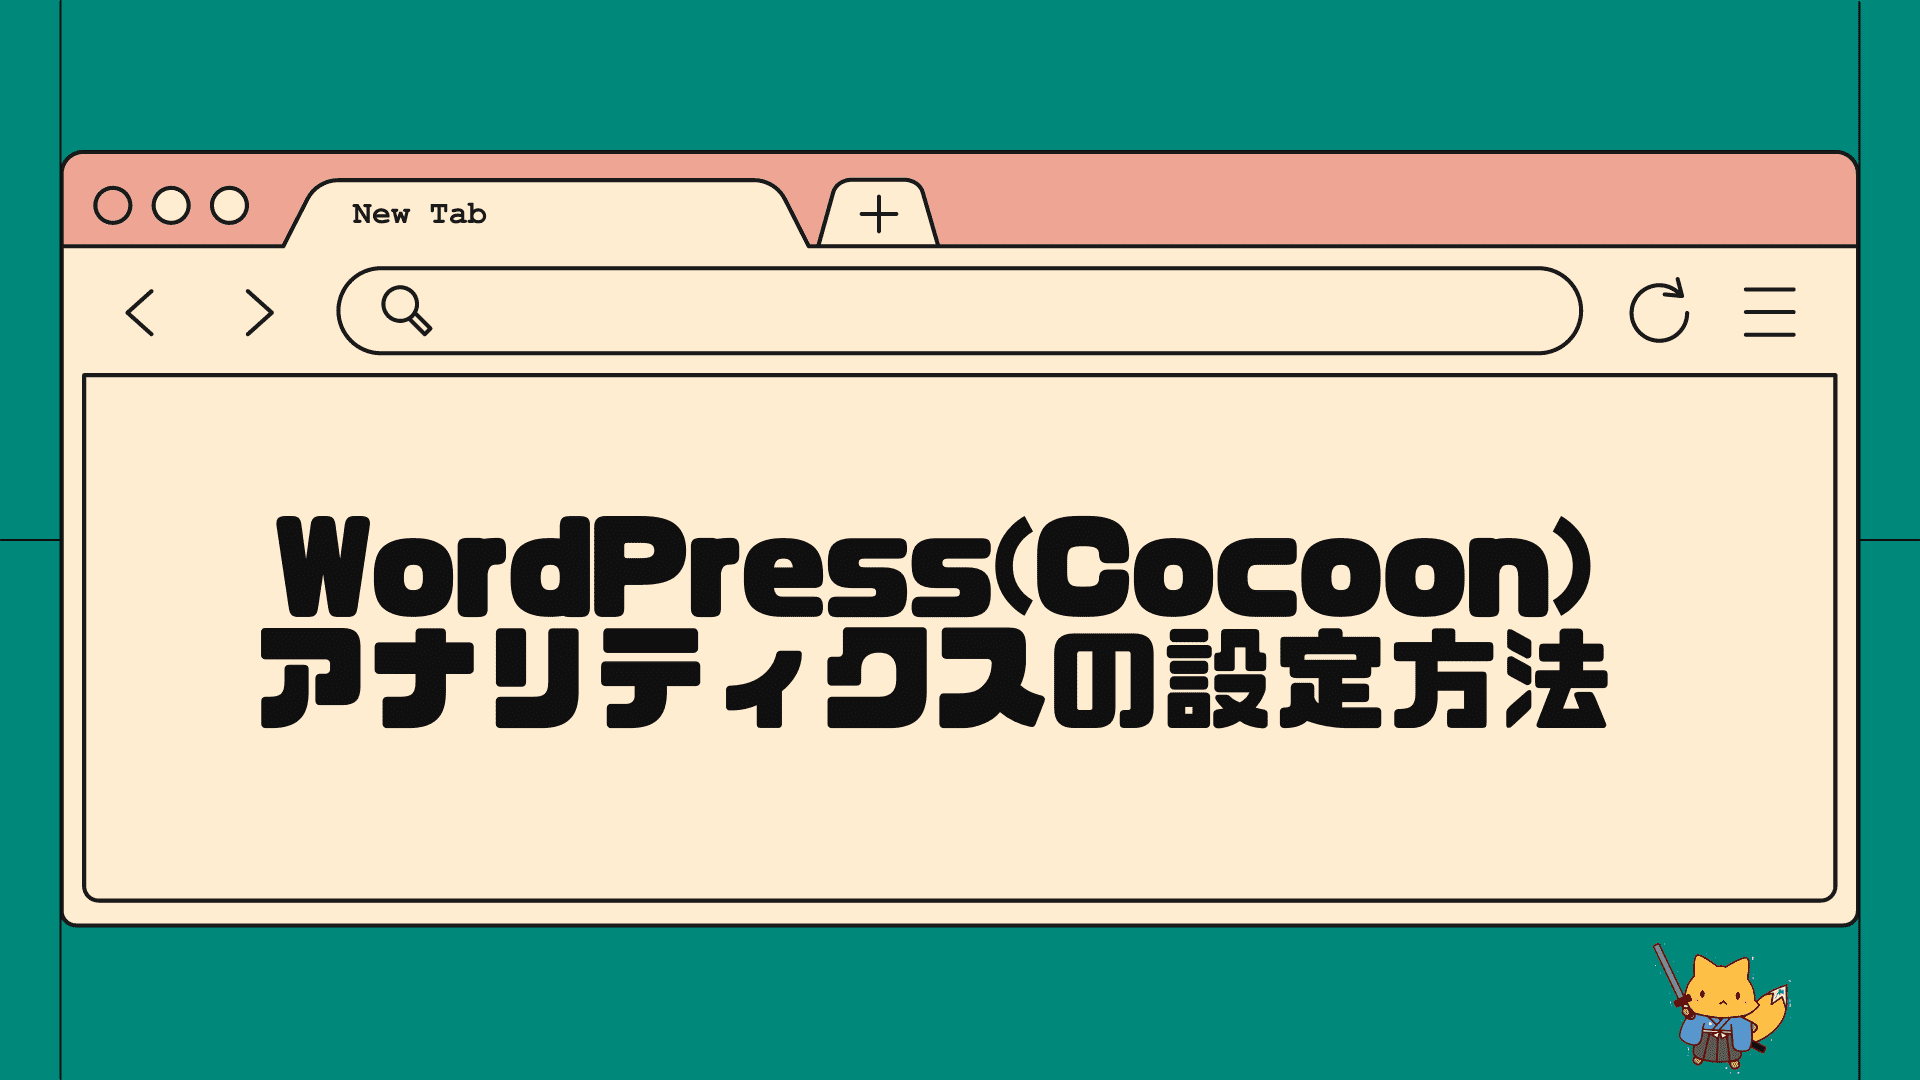 wordpress(cocoon)でアナリティクスの設定方法